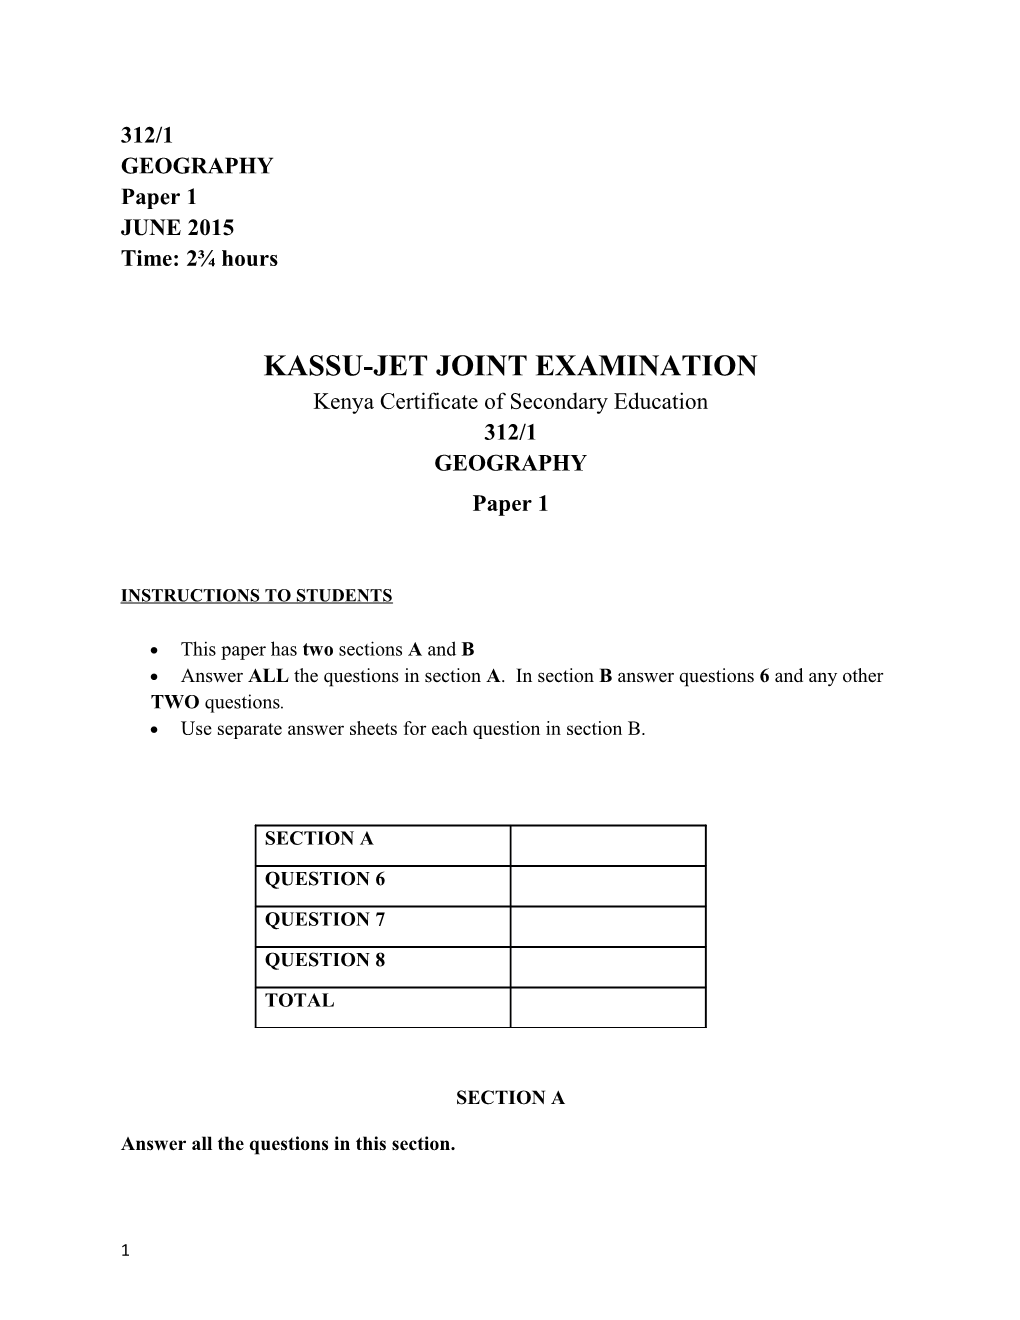 Kassu-Jet Joint Examination